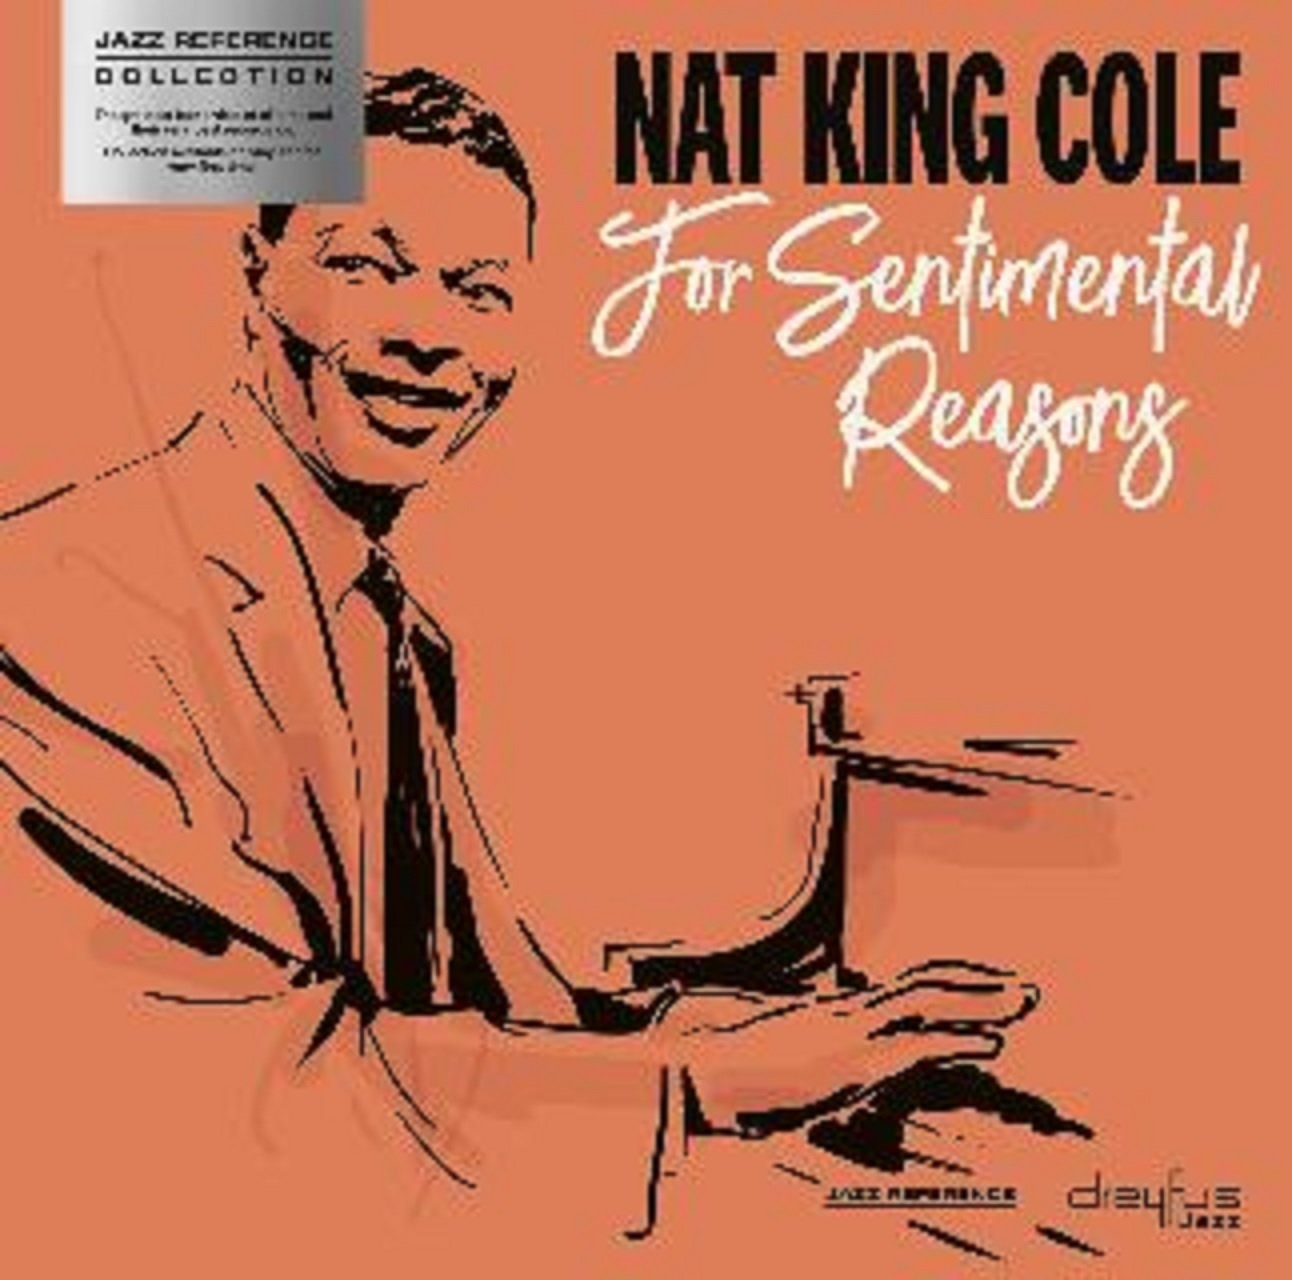 Cole, Nat King - For Sentimental Reasons